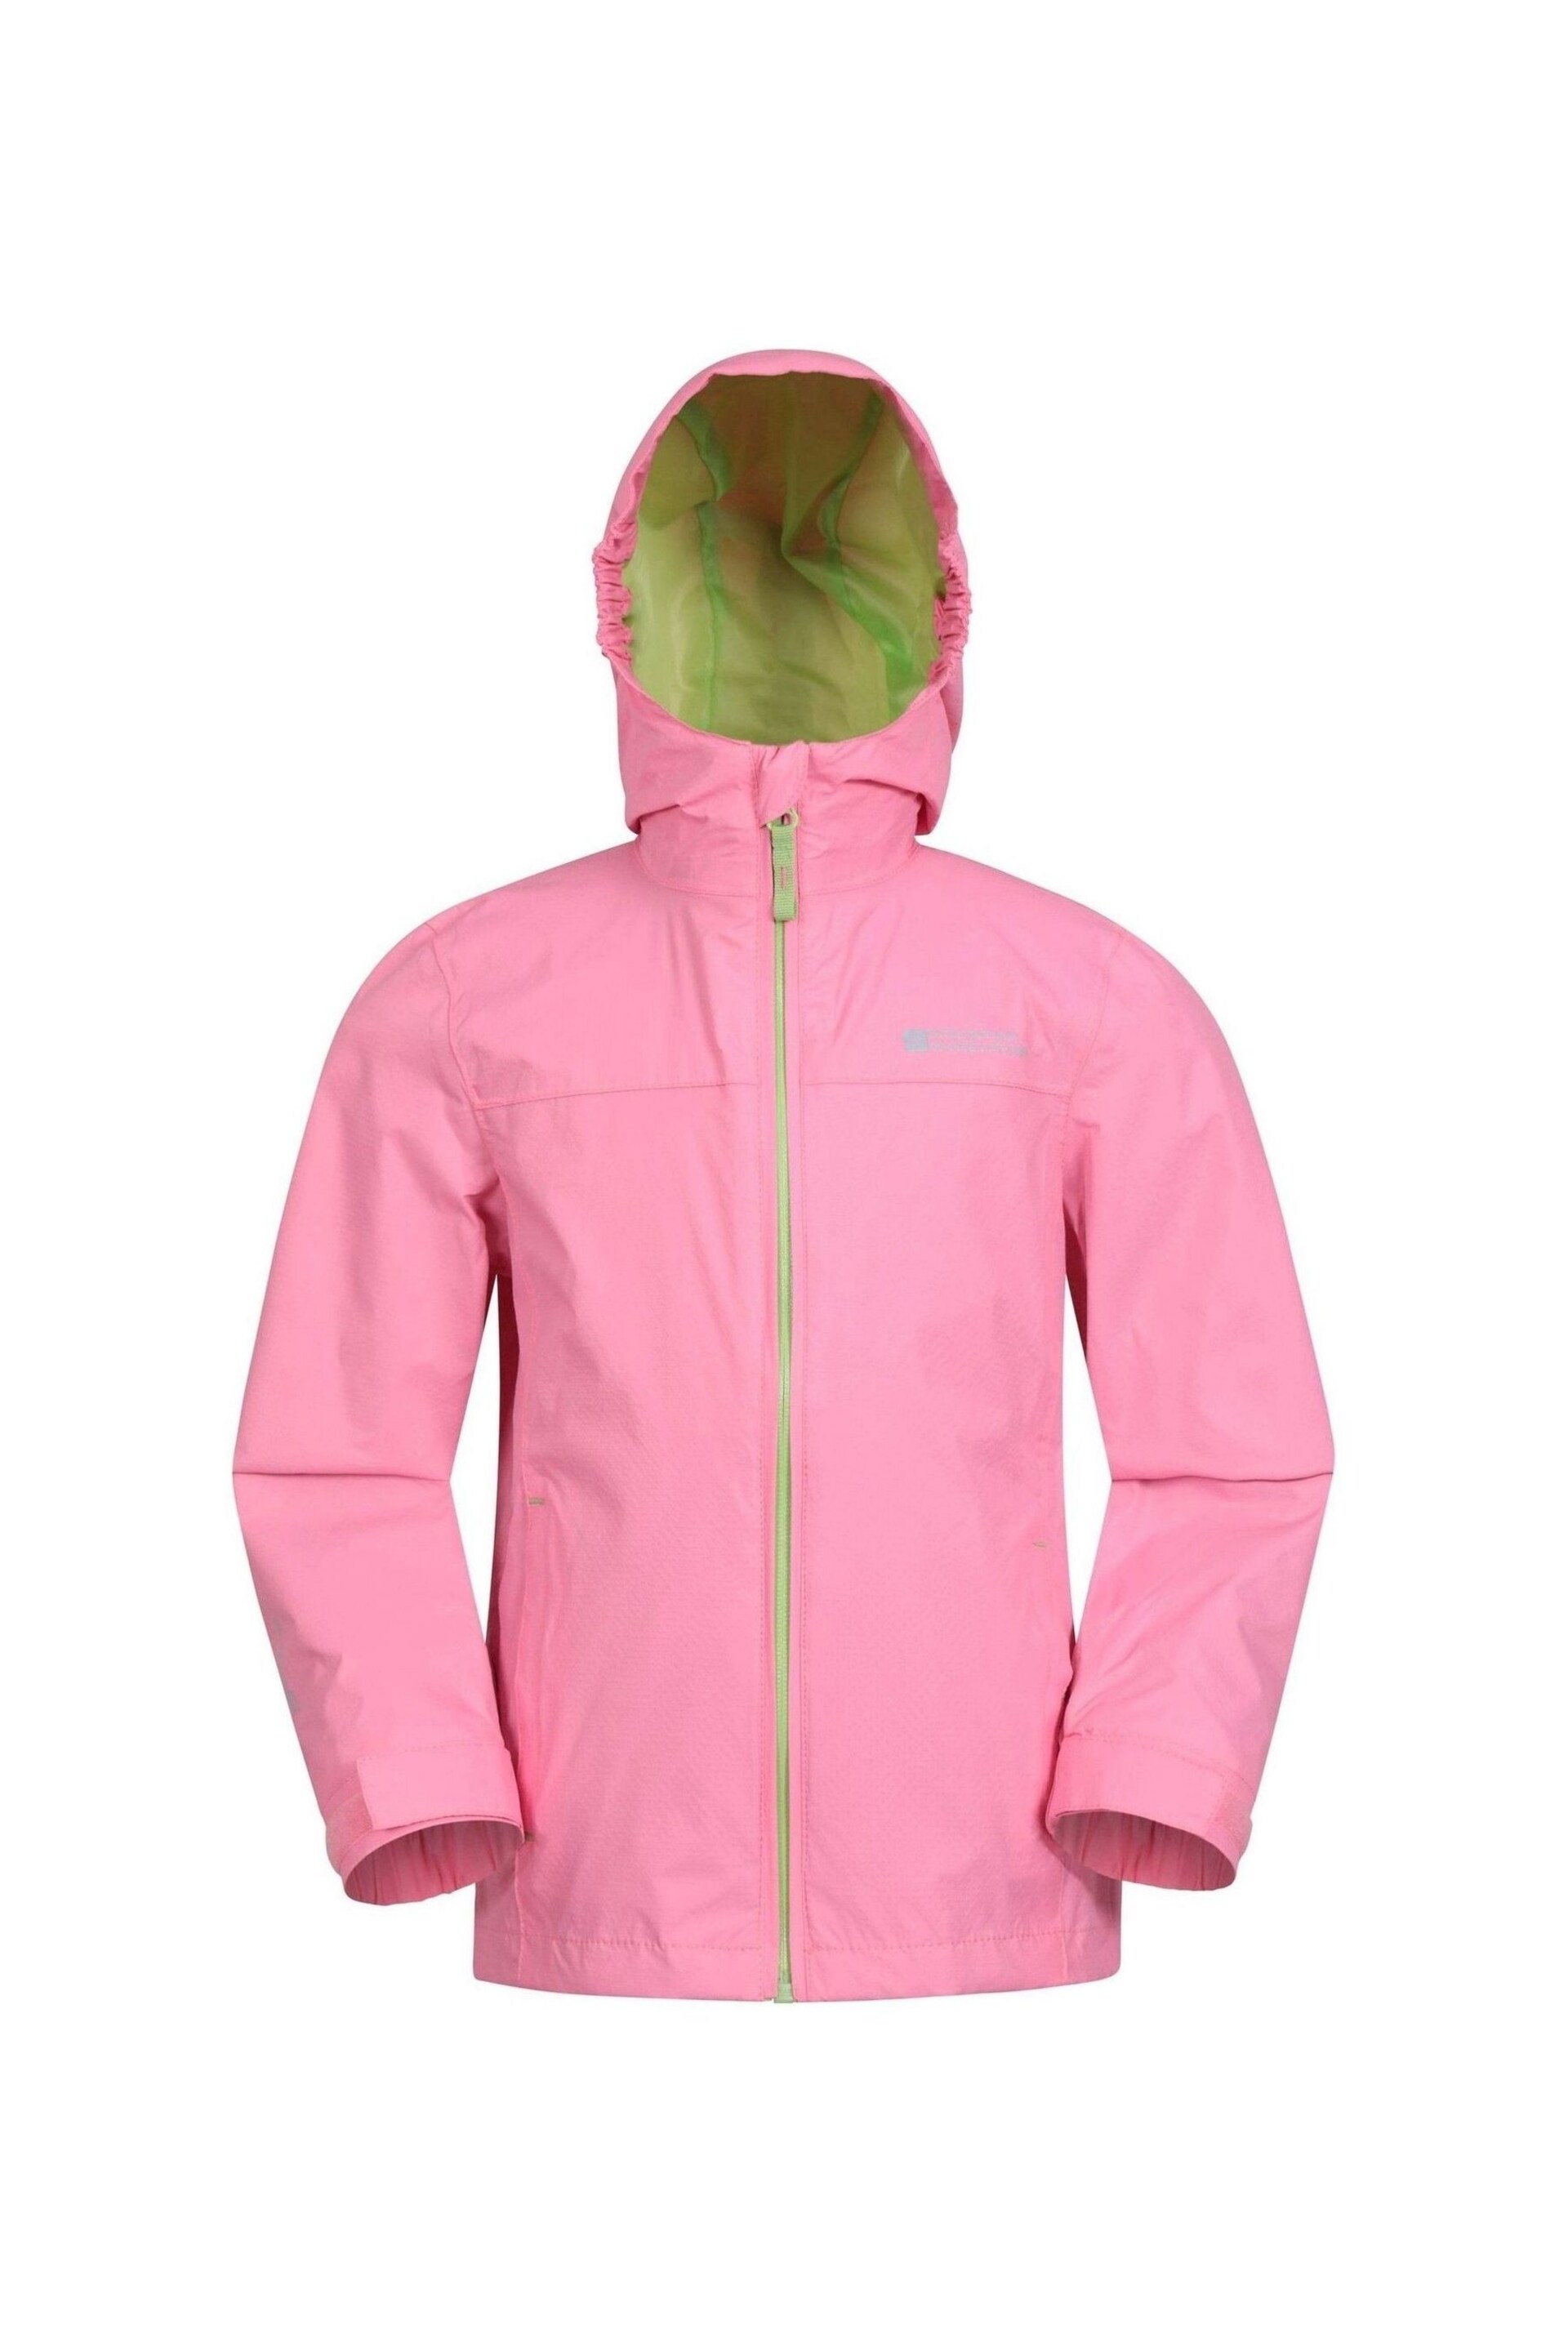 Mountain Warehouse Pink Torrent Waterproof Jacket - Image 3 of 5